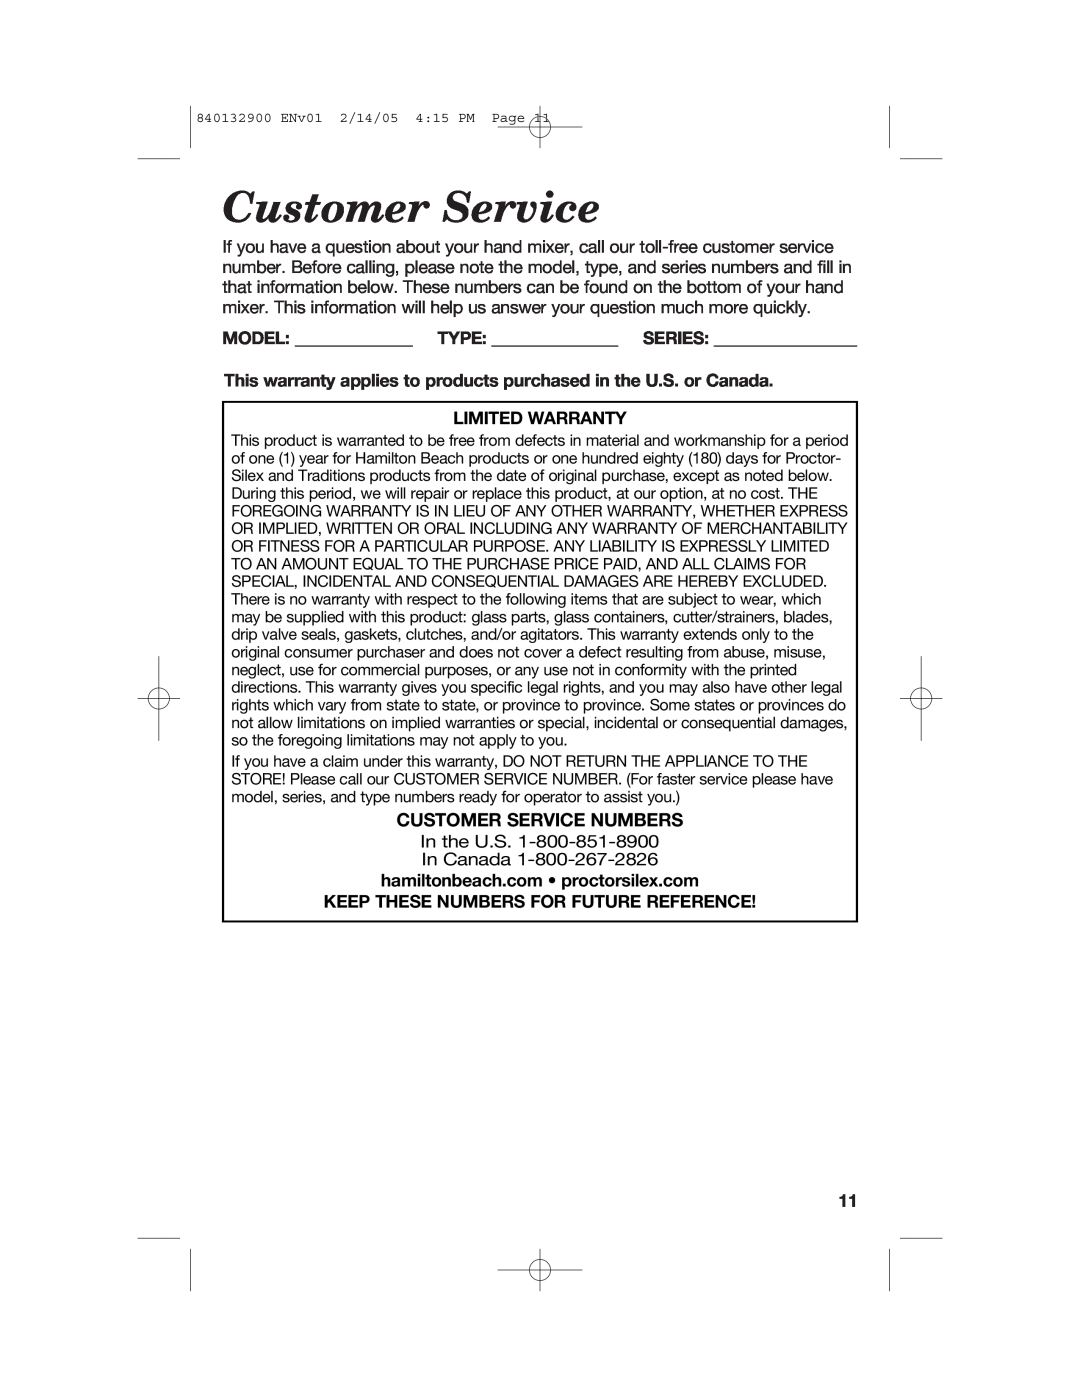 Hamilton Beach 840132900 manual Customer Service Numbers 